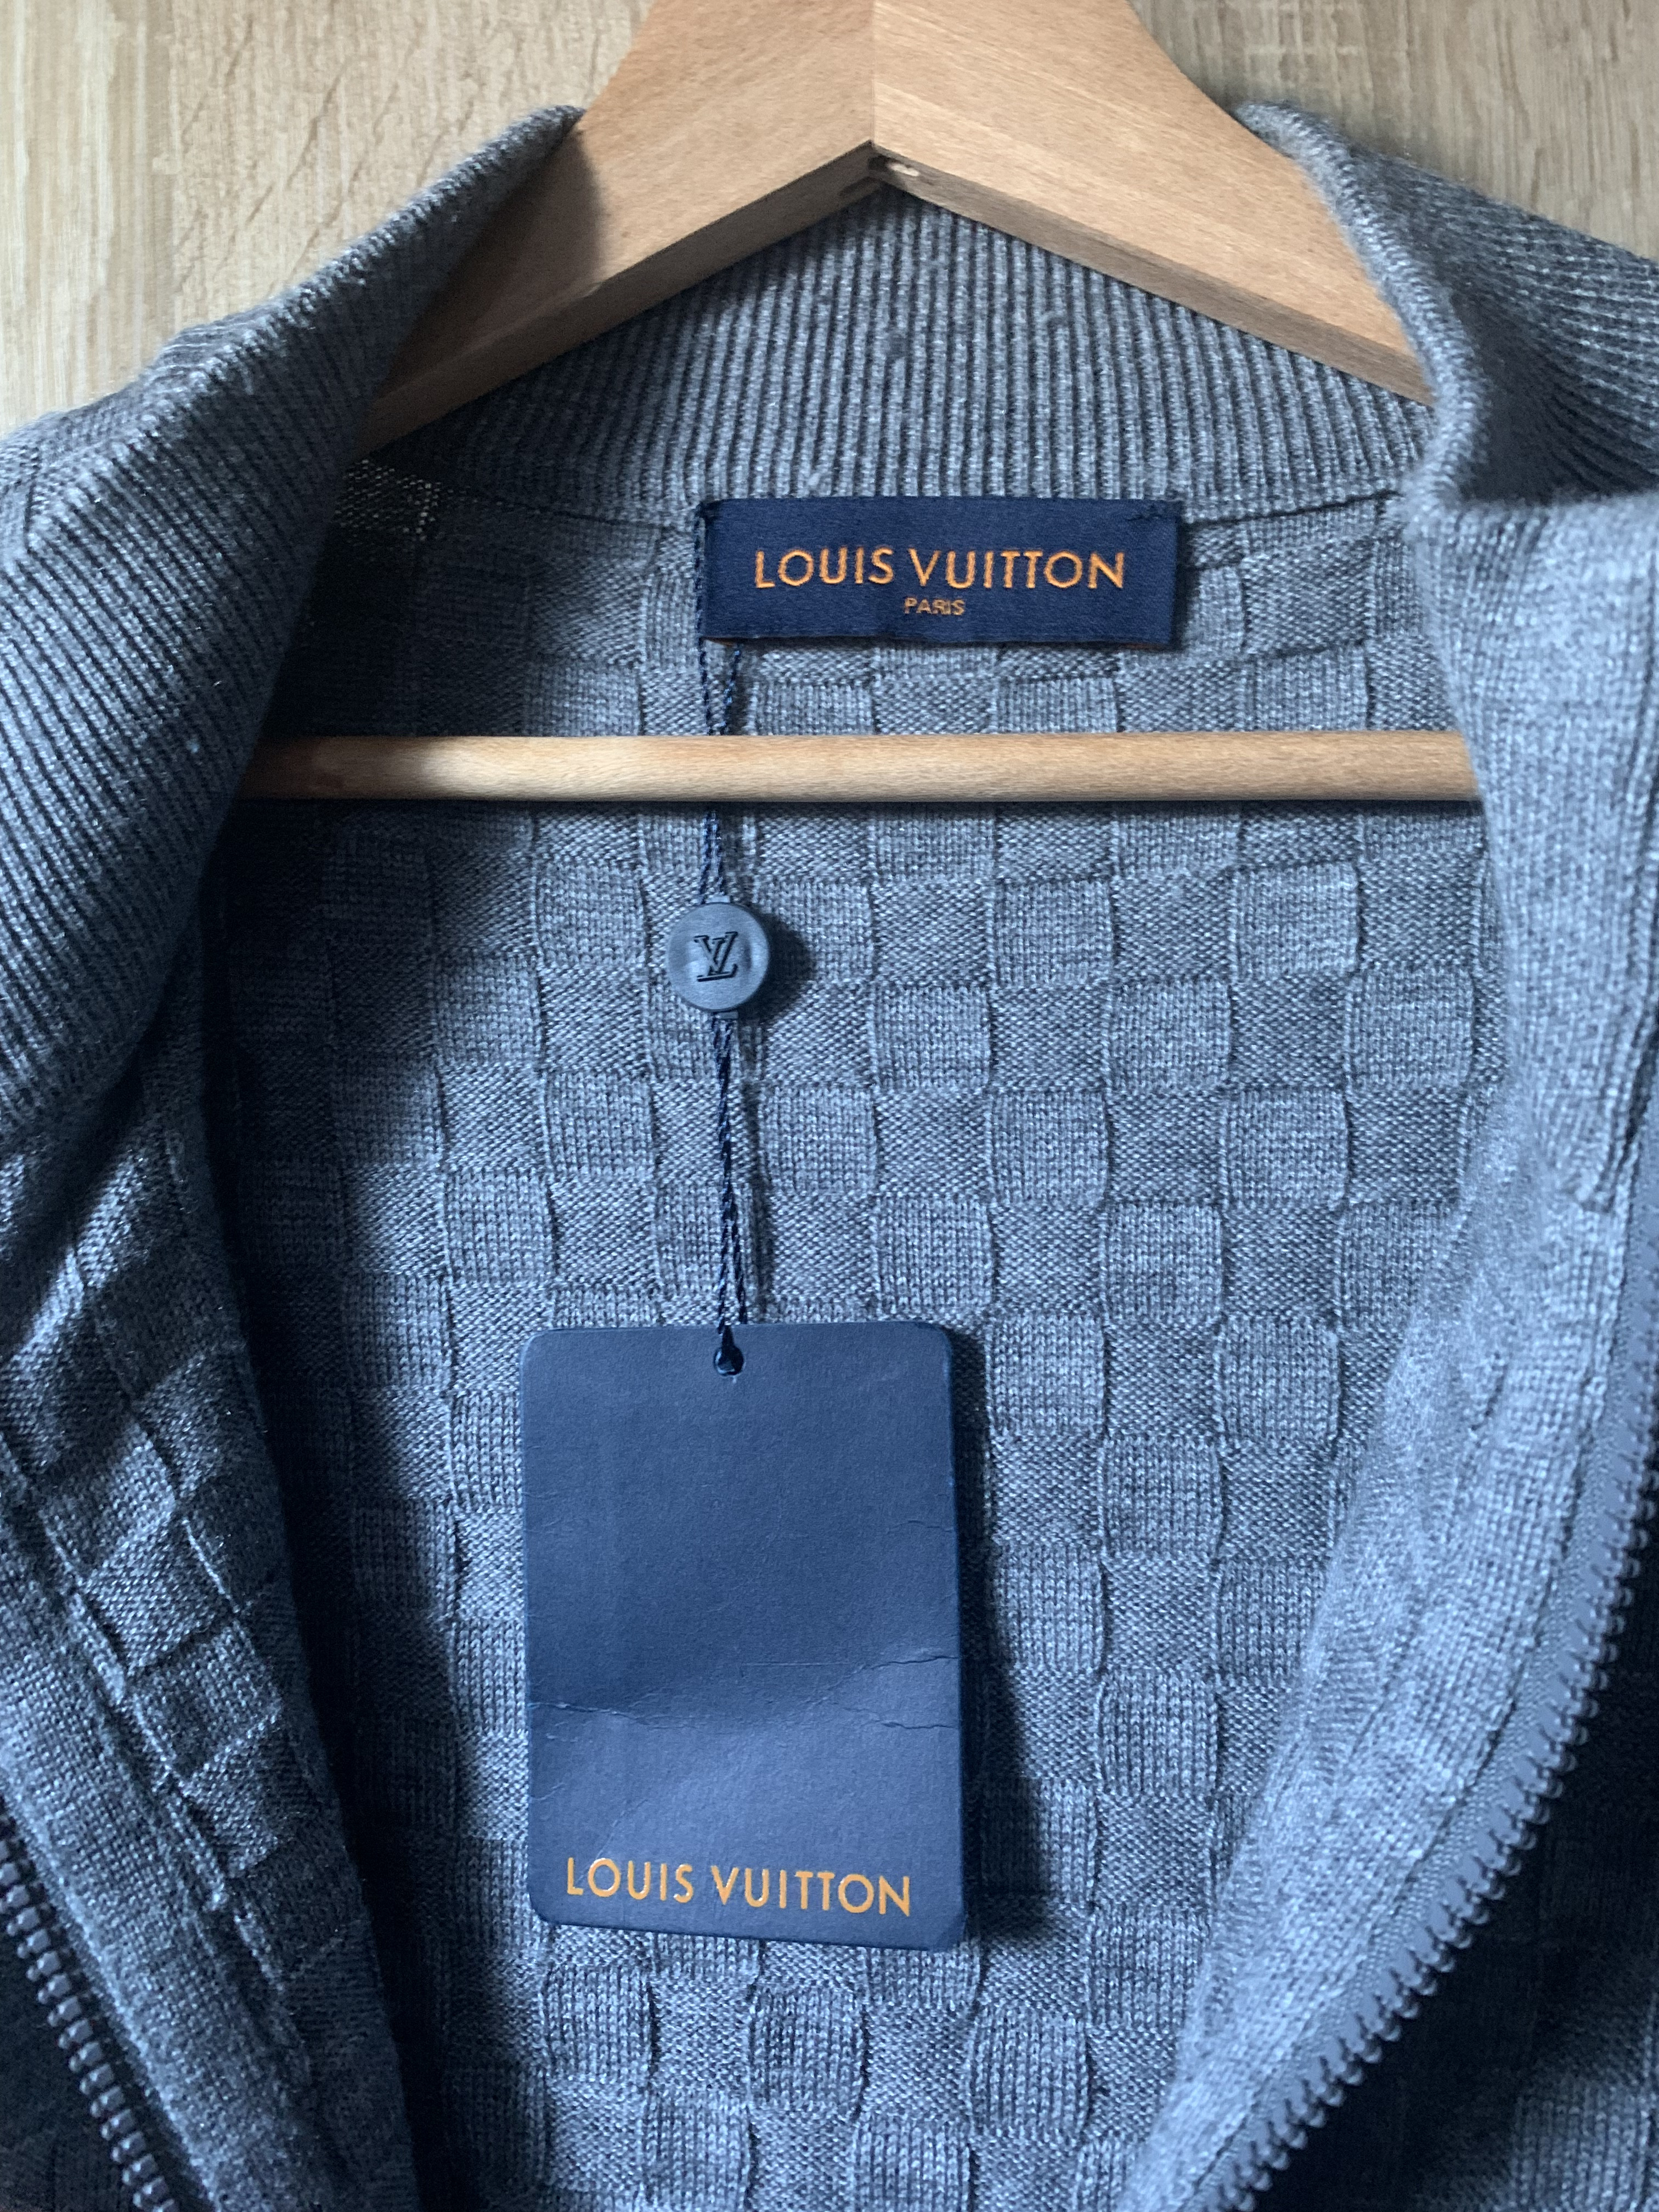 Matthew D on Instagram: Better photos of the LVSE Damier Signature  Cardigan in “Dark Gray”. #lv #lvmen #lvwomen #lvrtw #lvclothes #lvsweater # lvse #lvdamier #louisvuitton #louisvuittonmen #louisvuittonwomen  #louisvuittonrtw #louisvuittoncloth